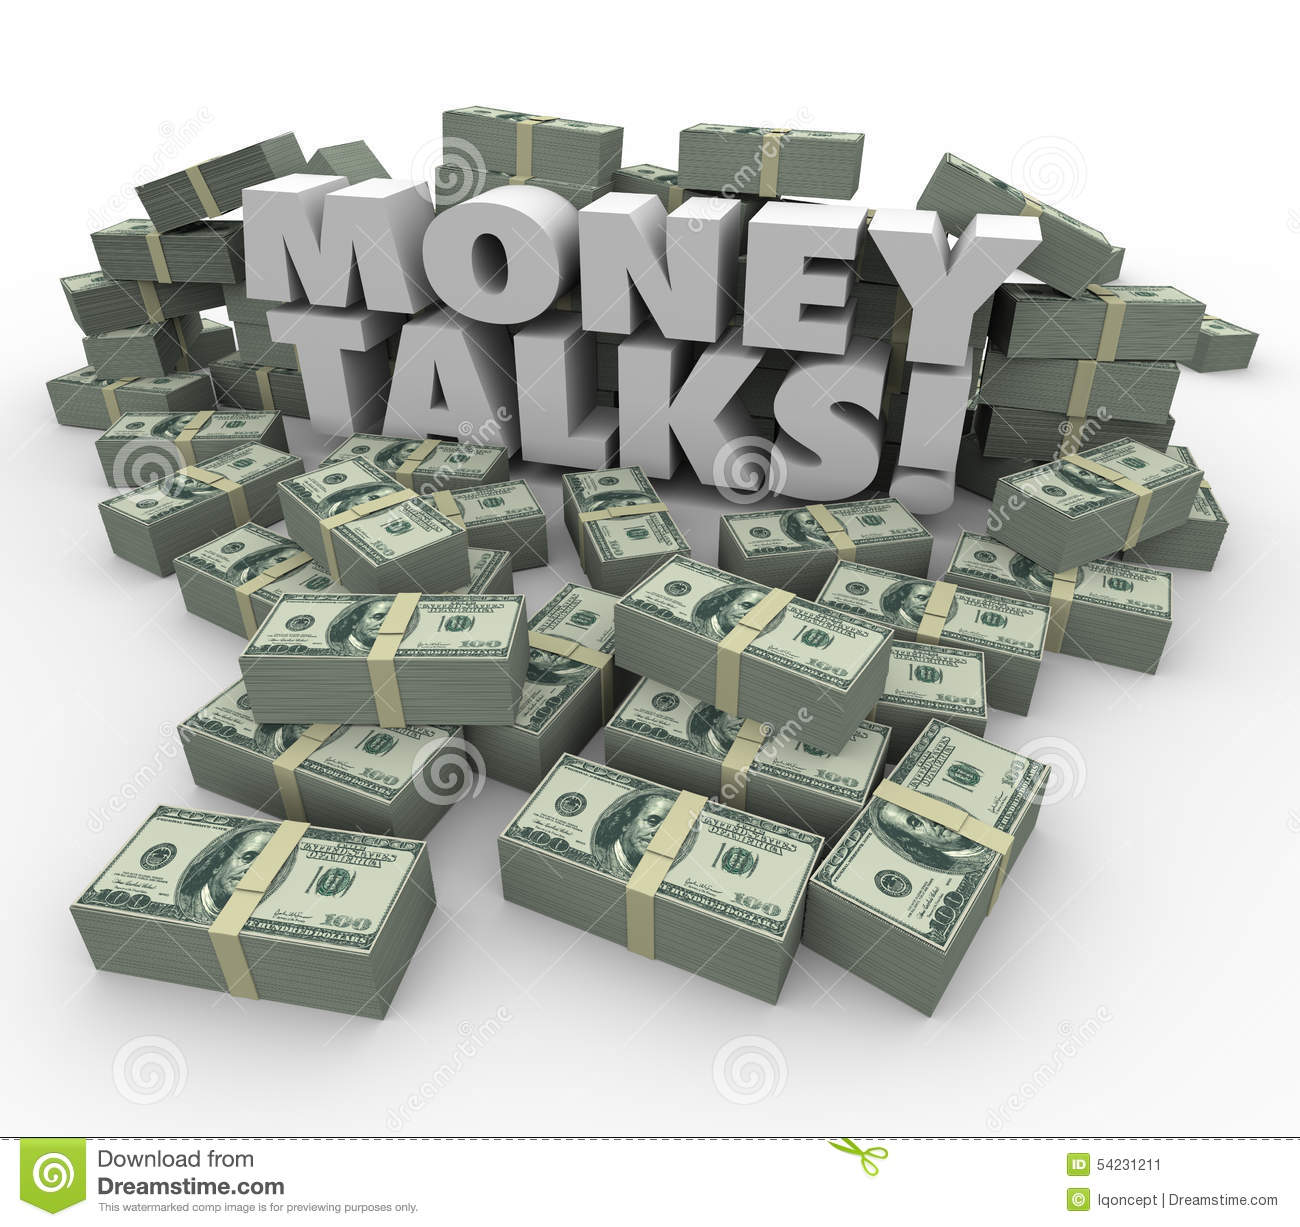 Split /. S. reccomend Money Talks